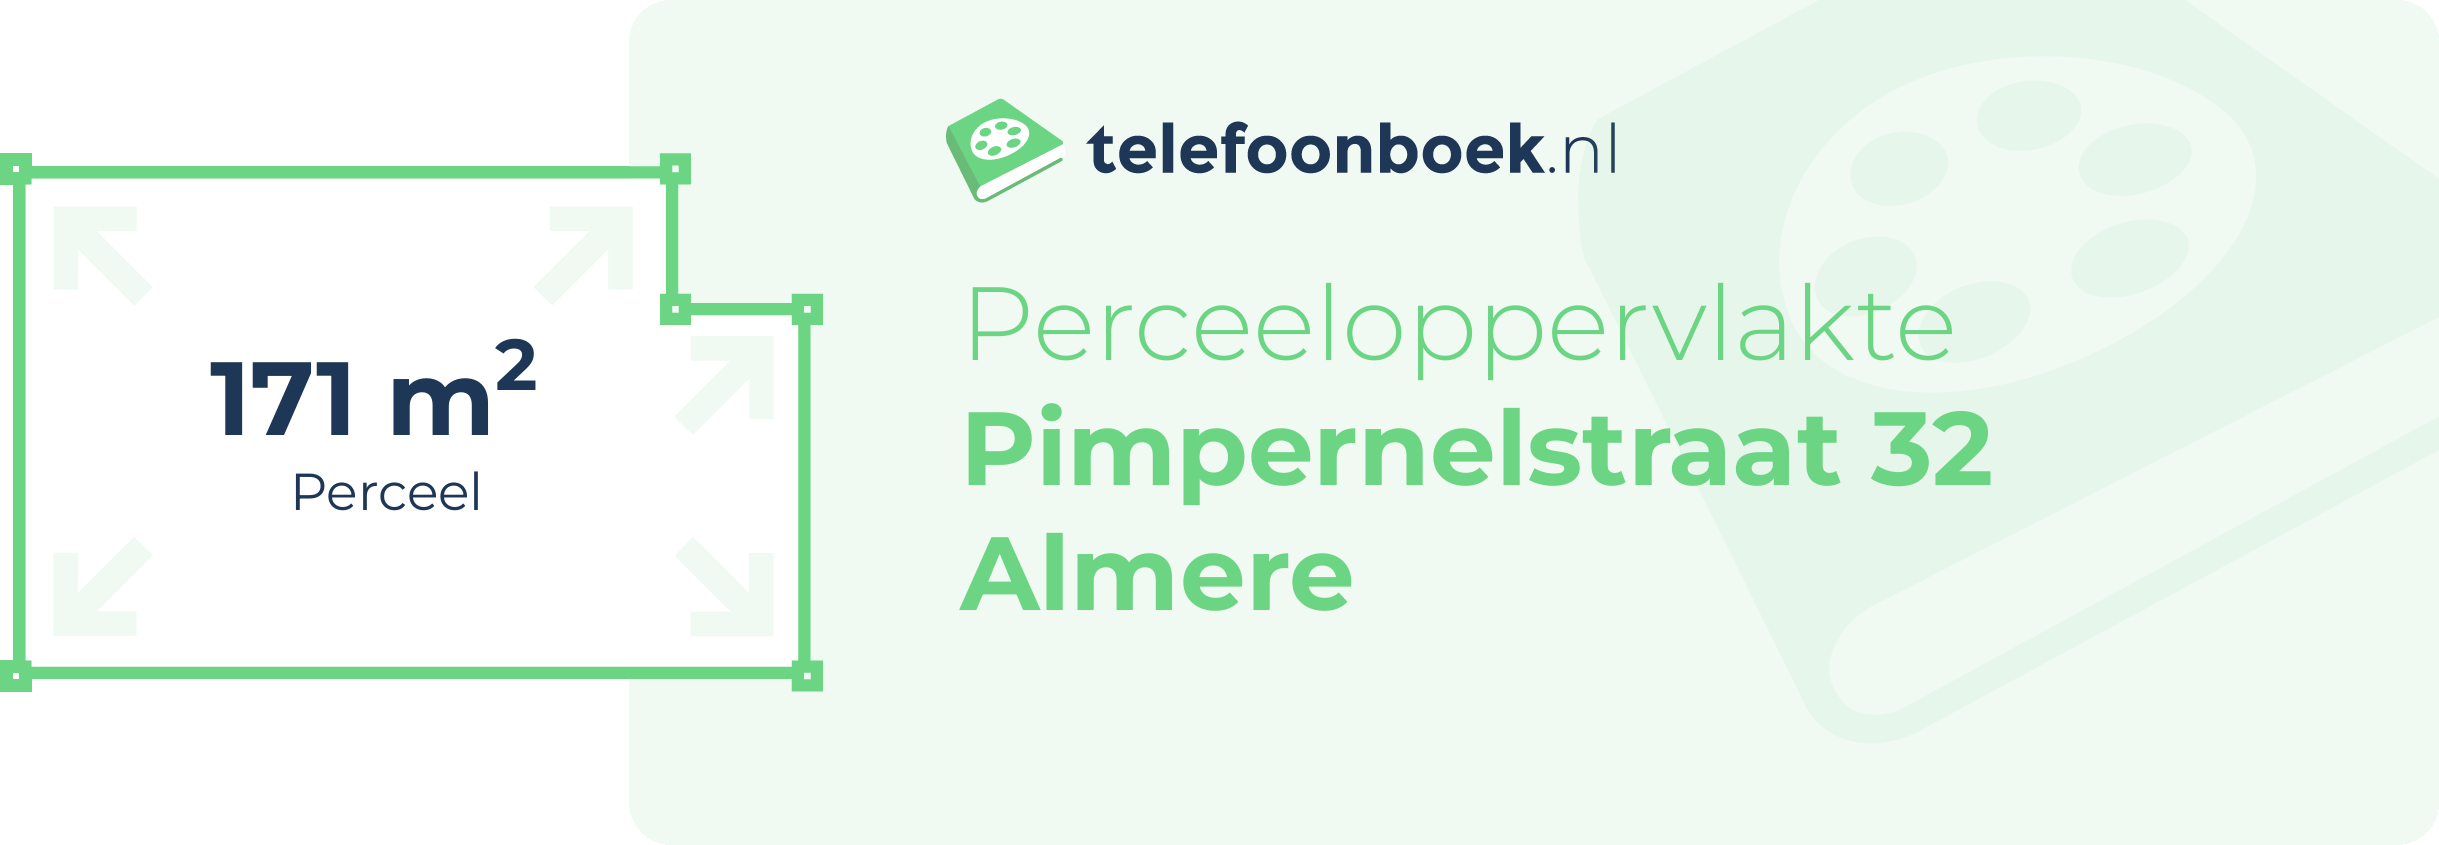 Perceeloppervlakte Pimpernelstraat 32 Almere